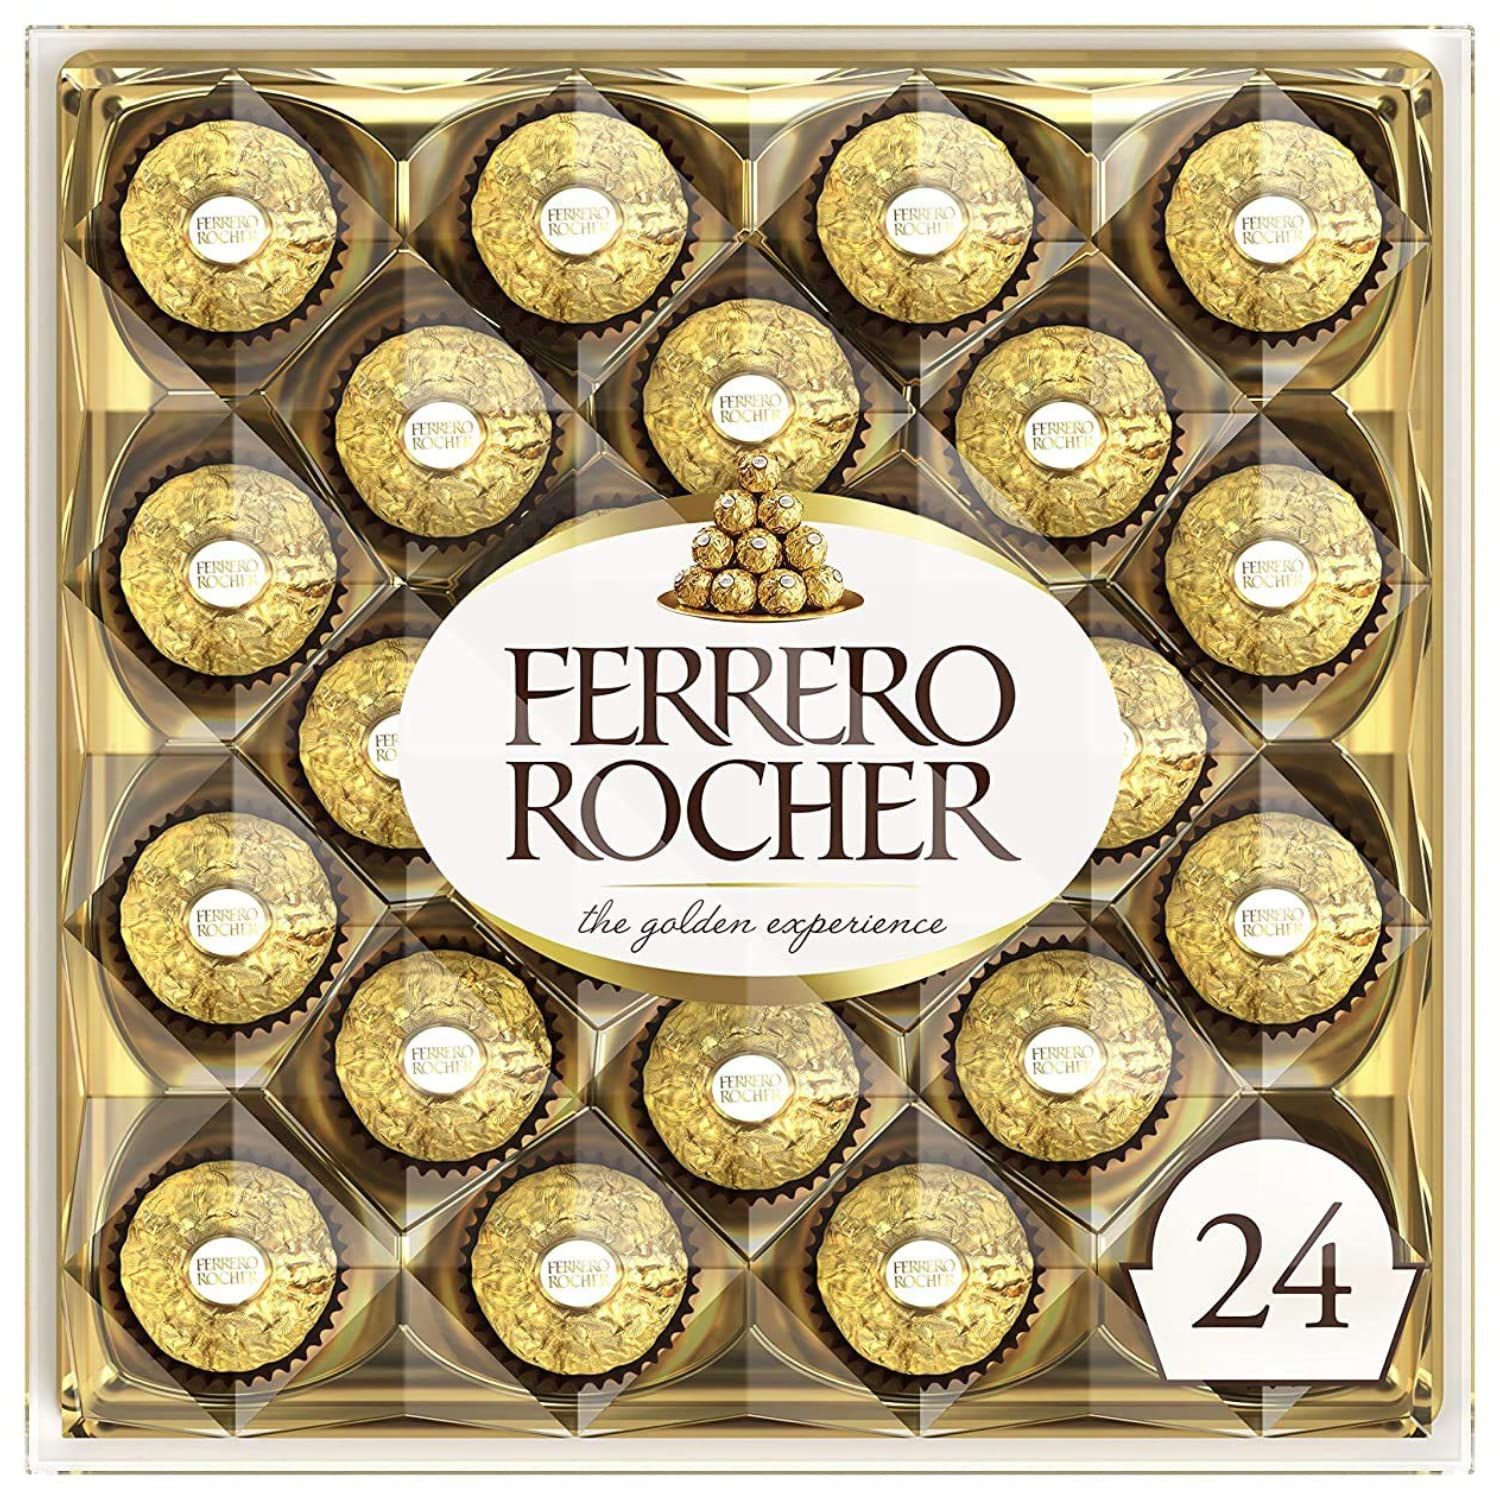 FERRERO ROCHER NAMED THE UK’S FAVOURITE CHOCOLATE